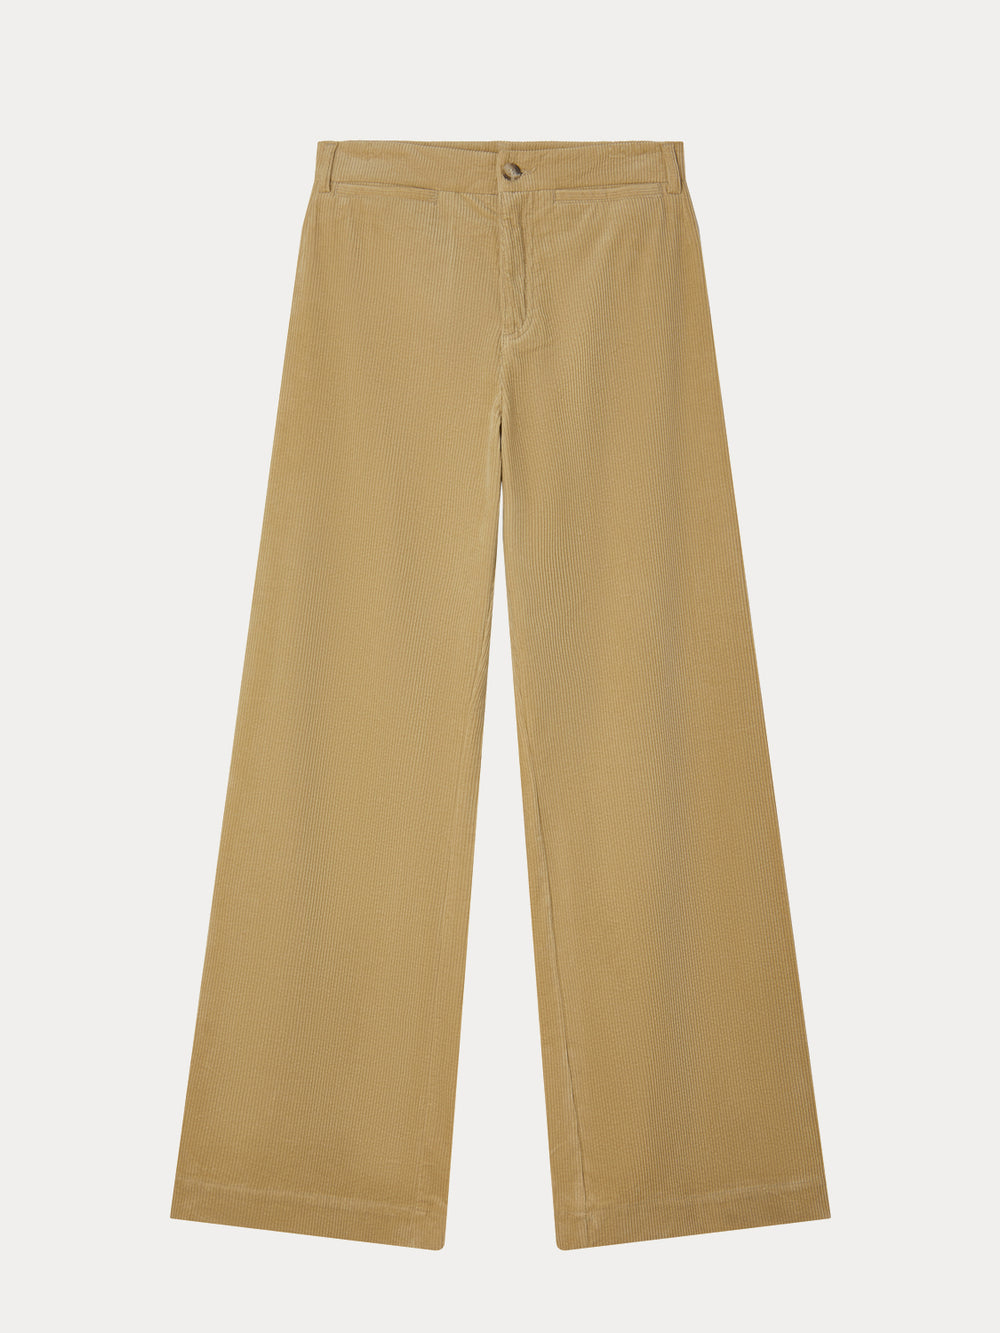 Pantalon Bristol beige